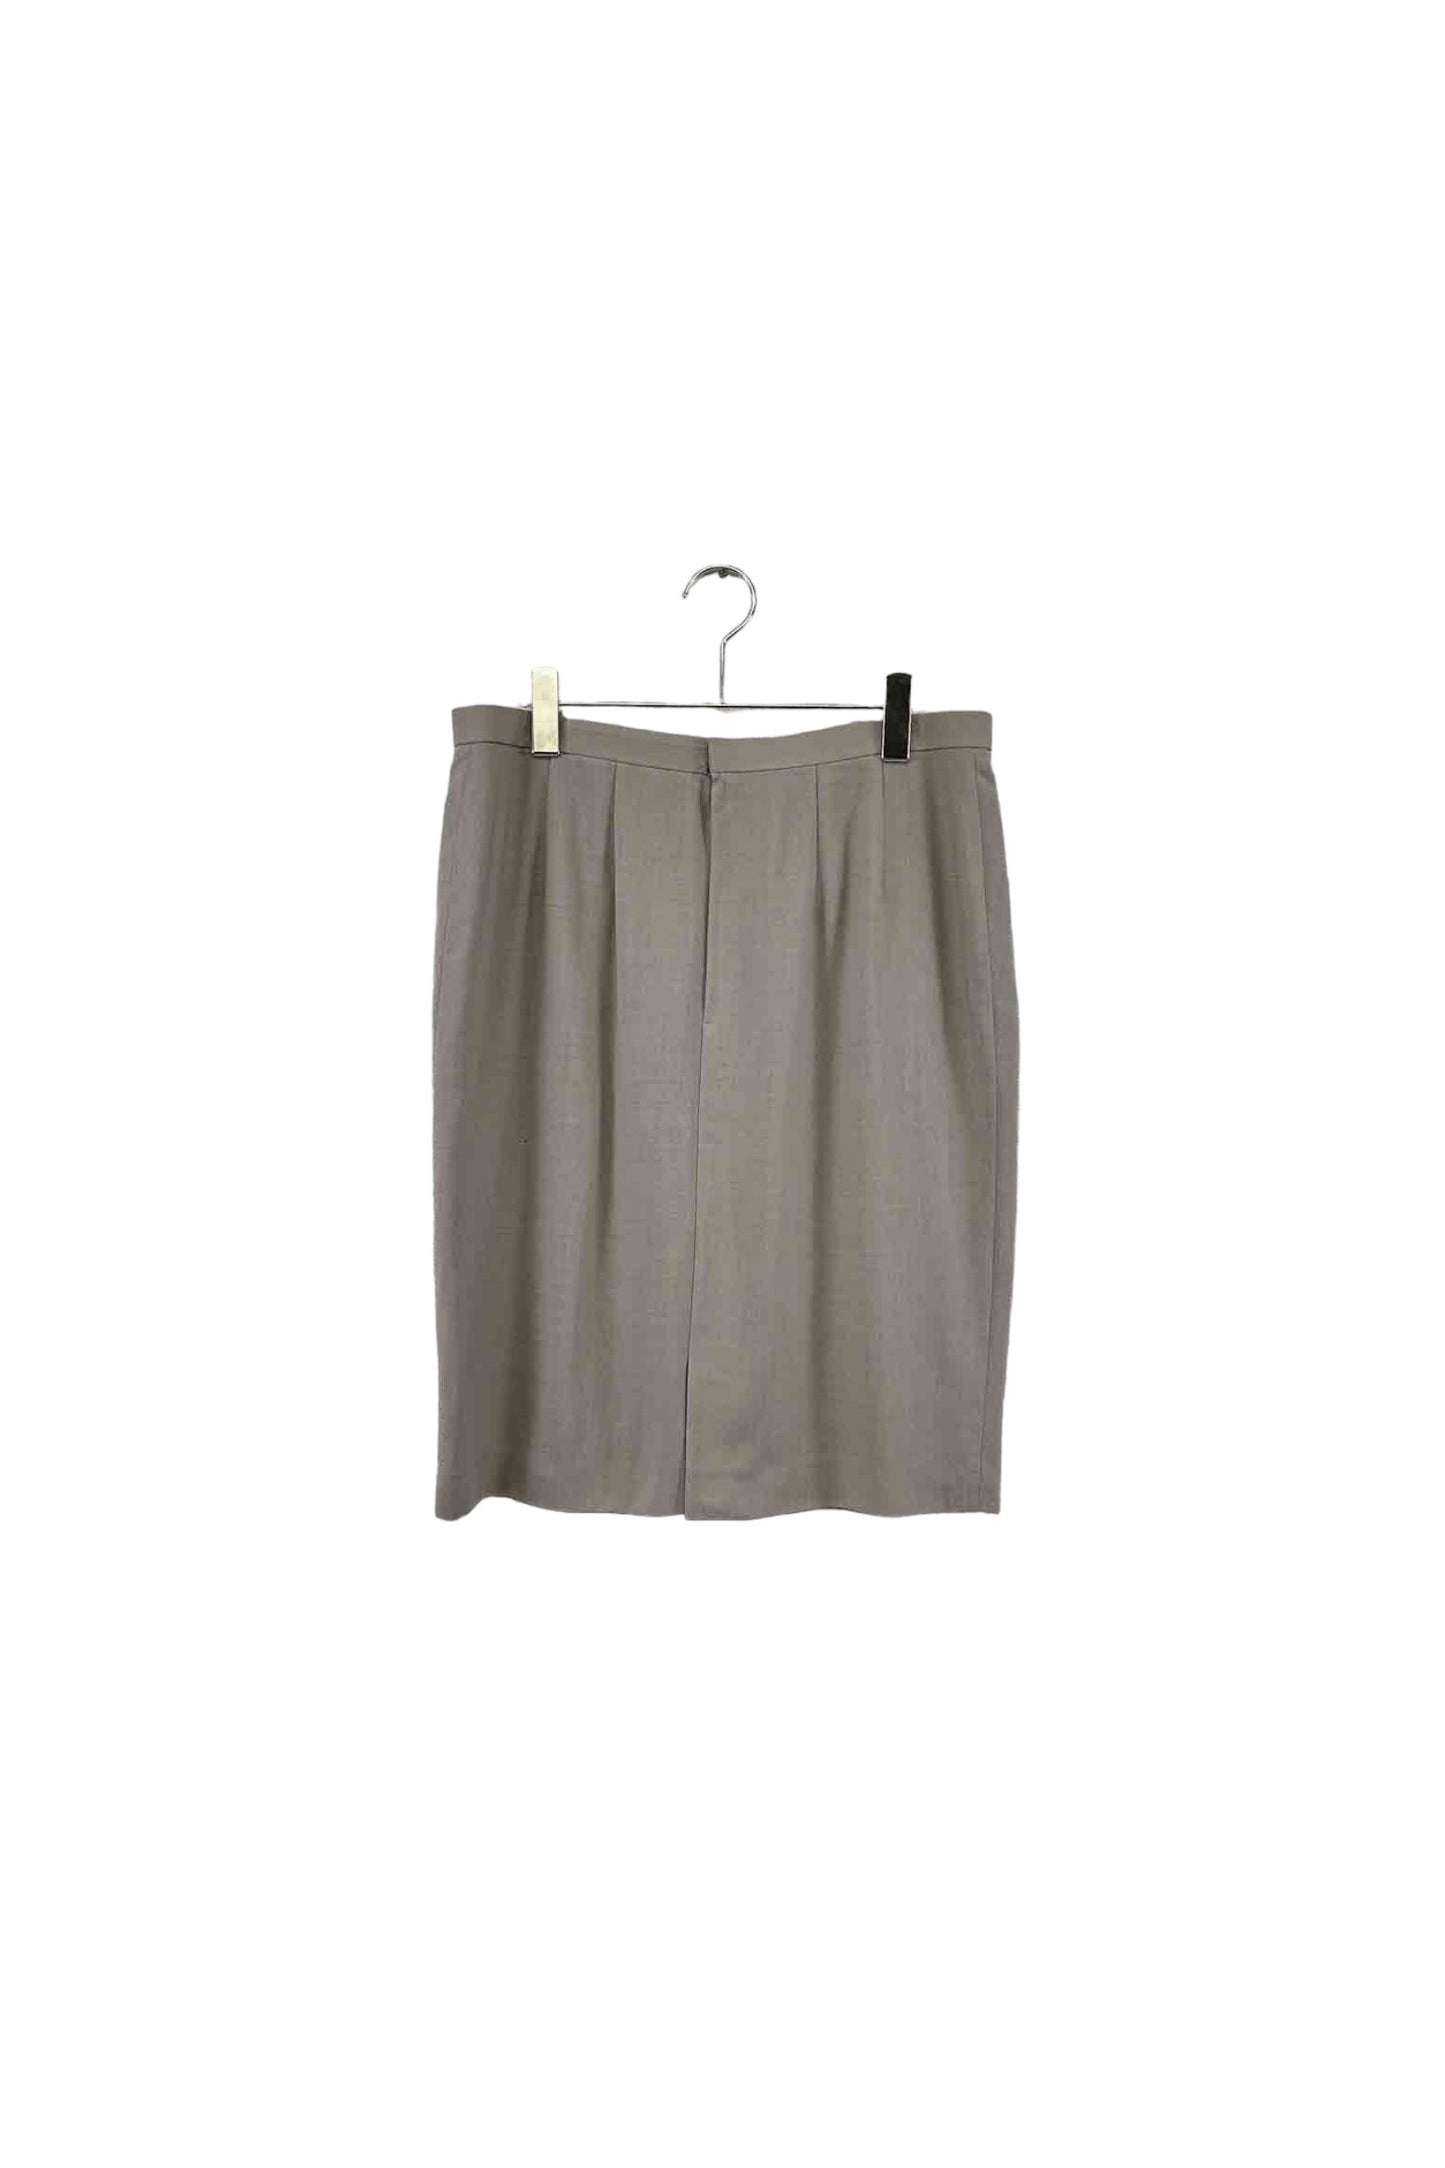 Chloe gray pleated skirt